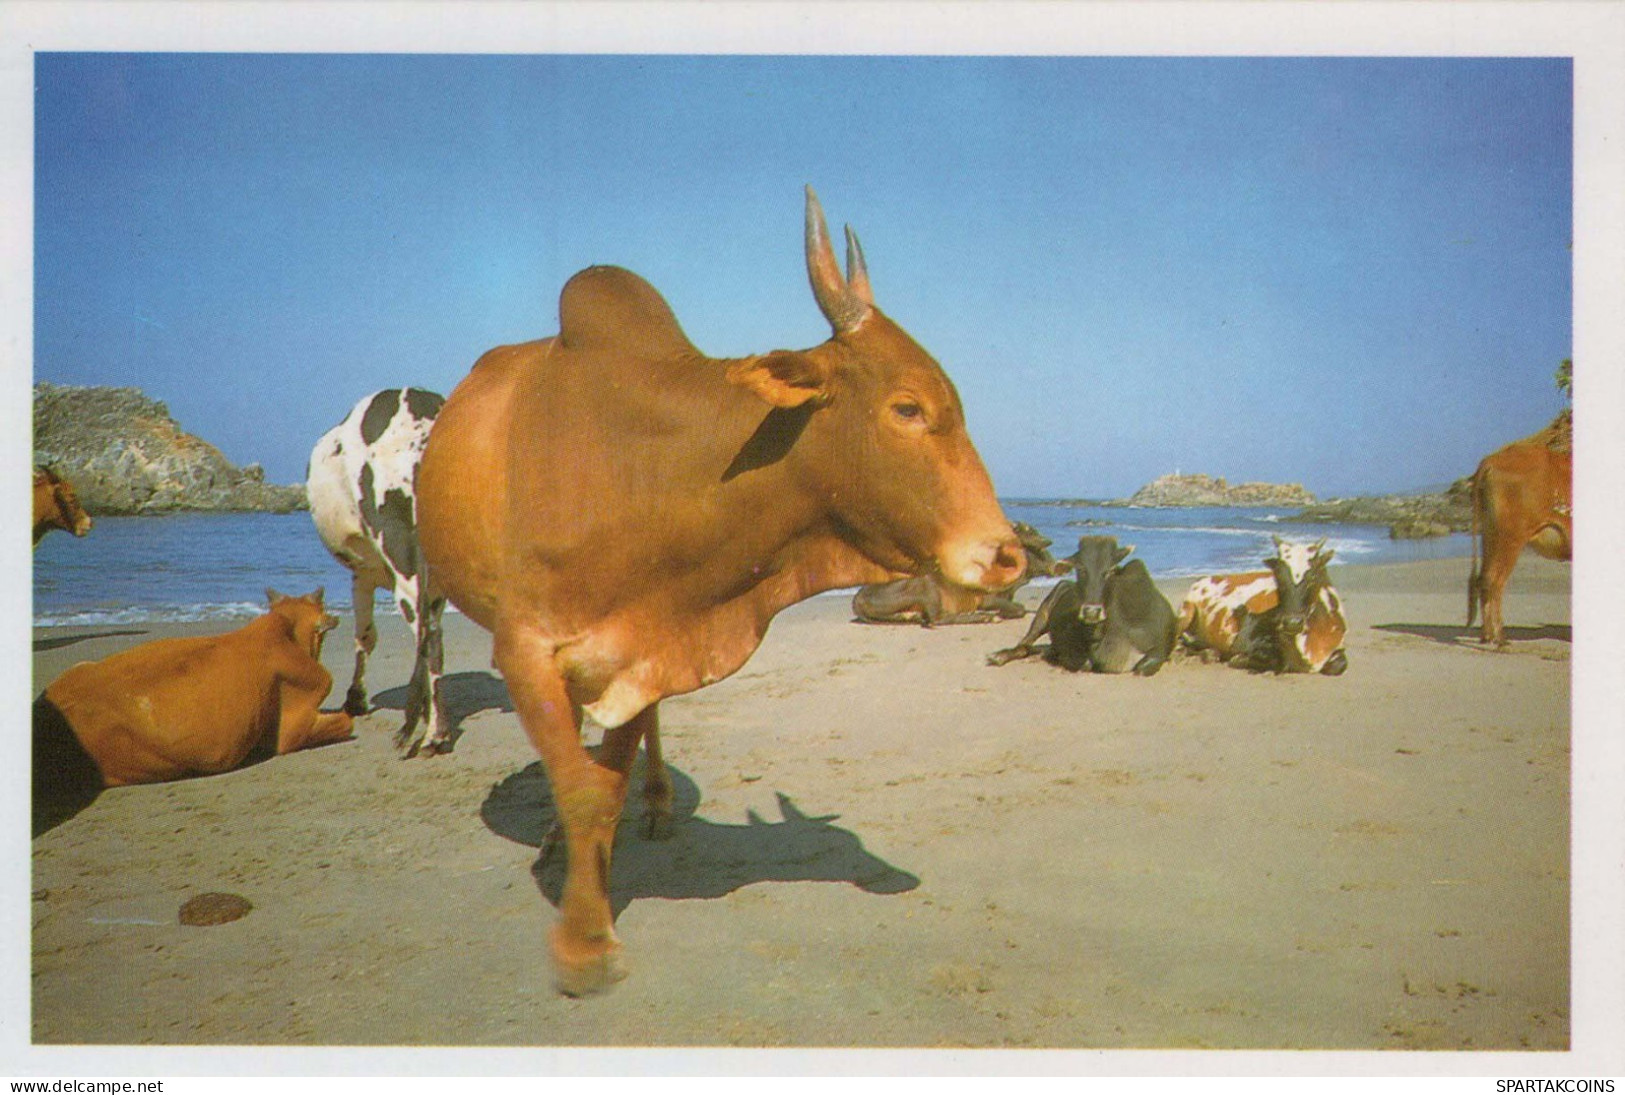 KUH Tier Vintage Ansichtskarte Postkarte CPSM #PBR793.A - Mucche